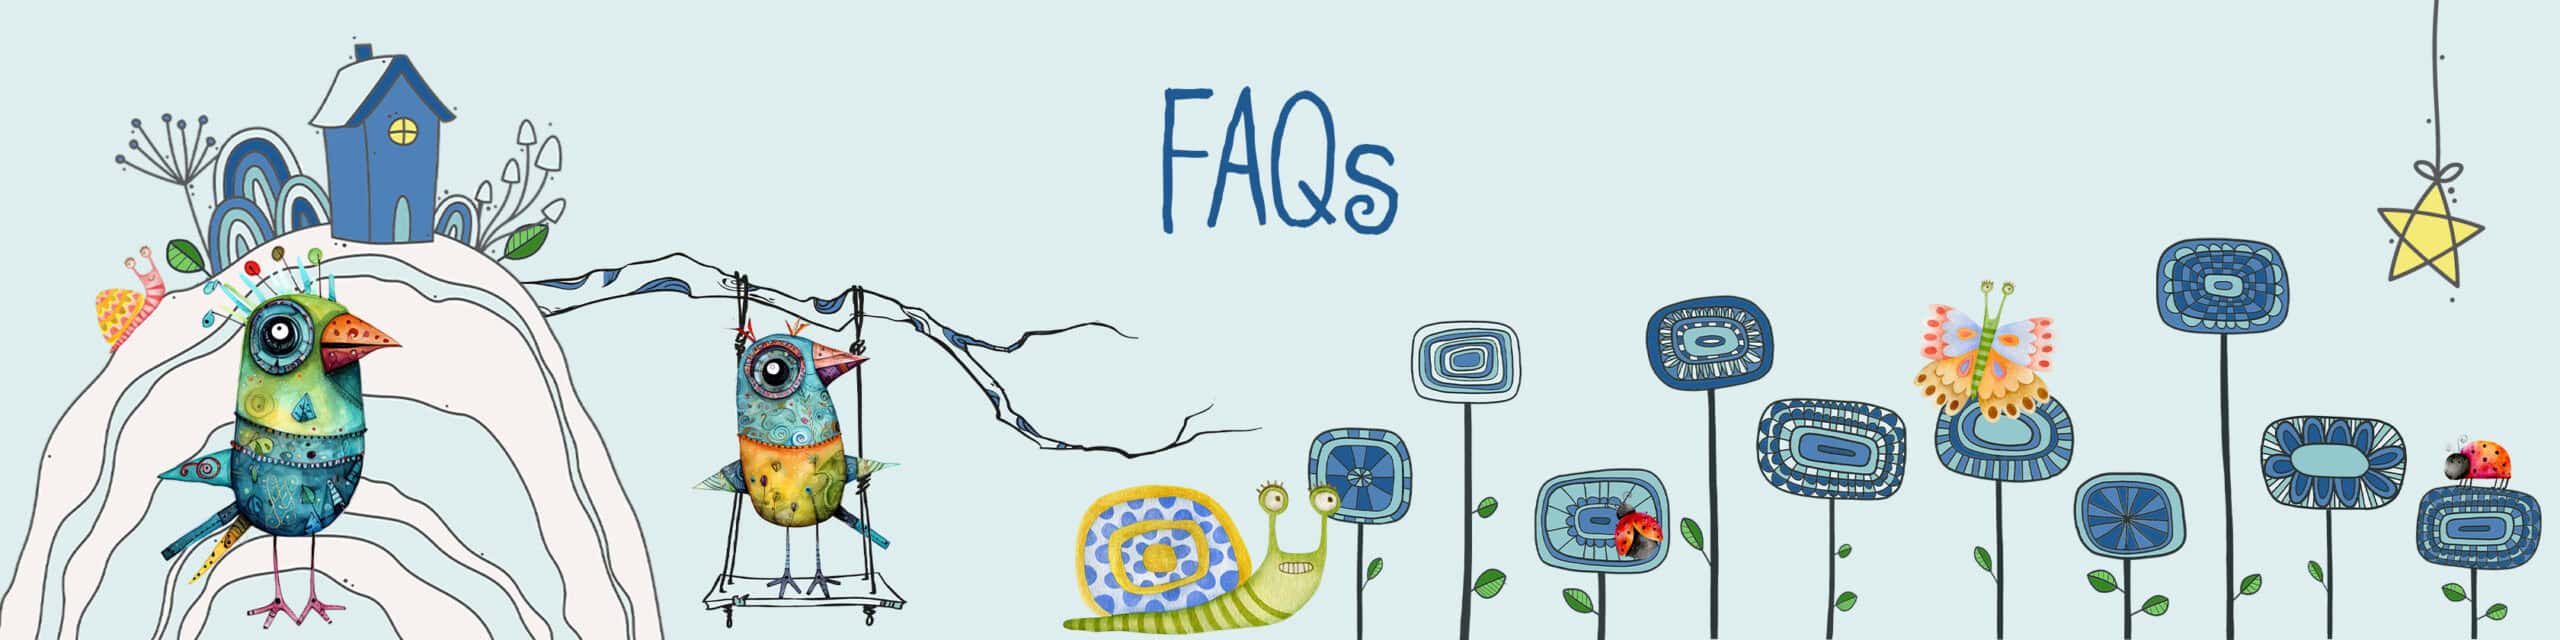 website banner FAQs